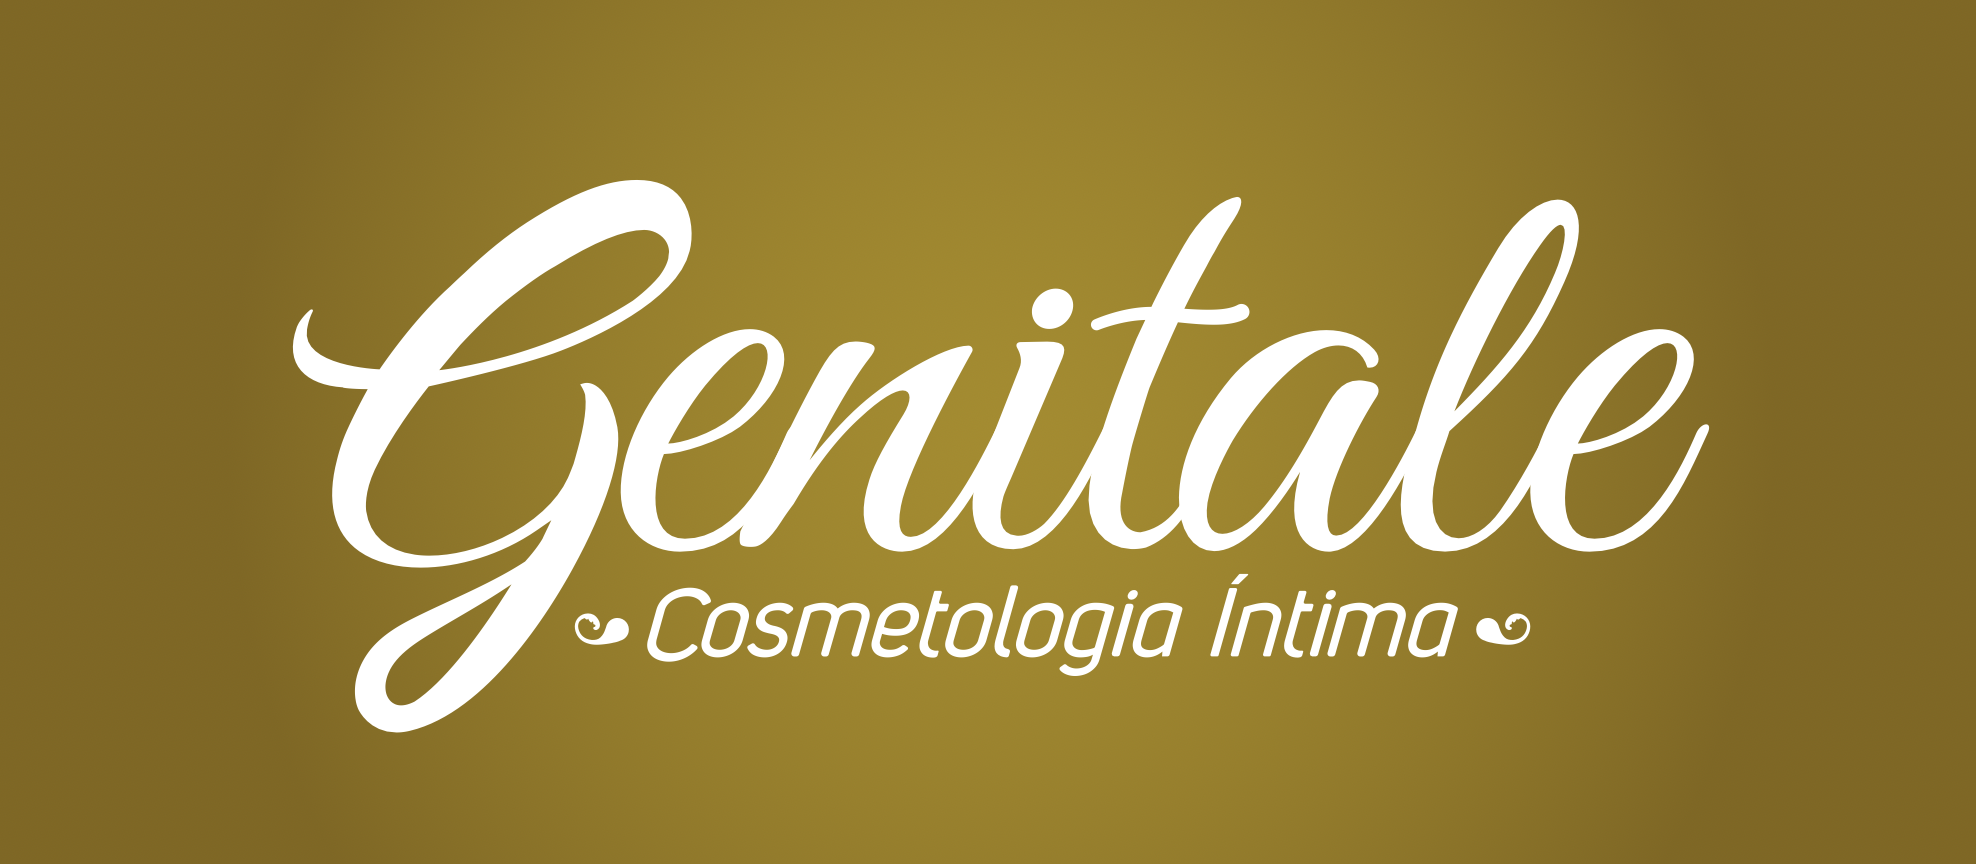 genitallia-logo